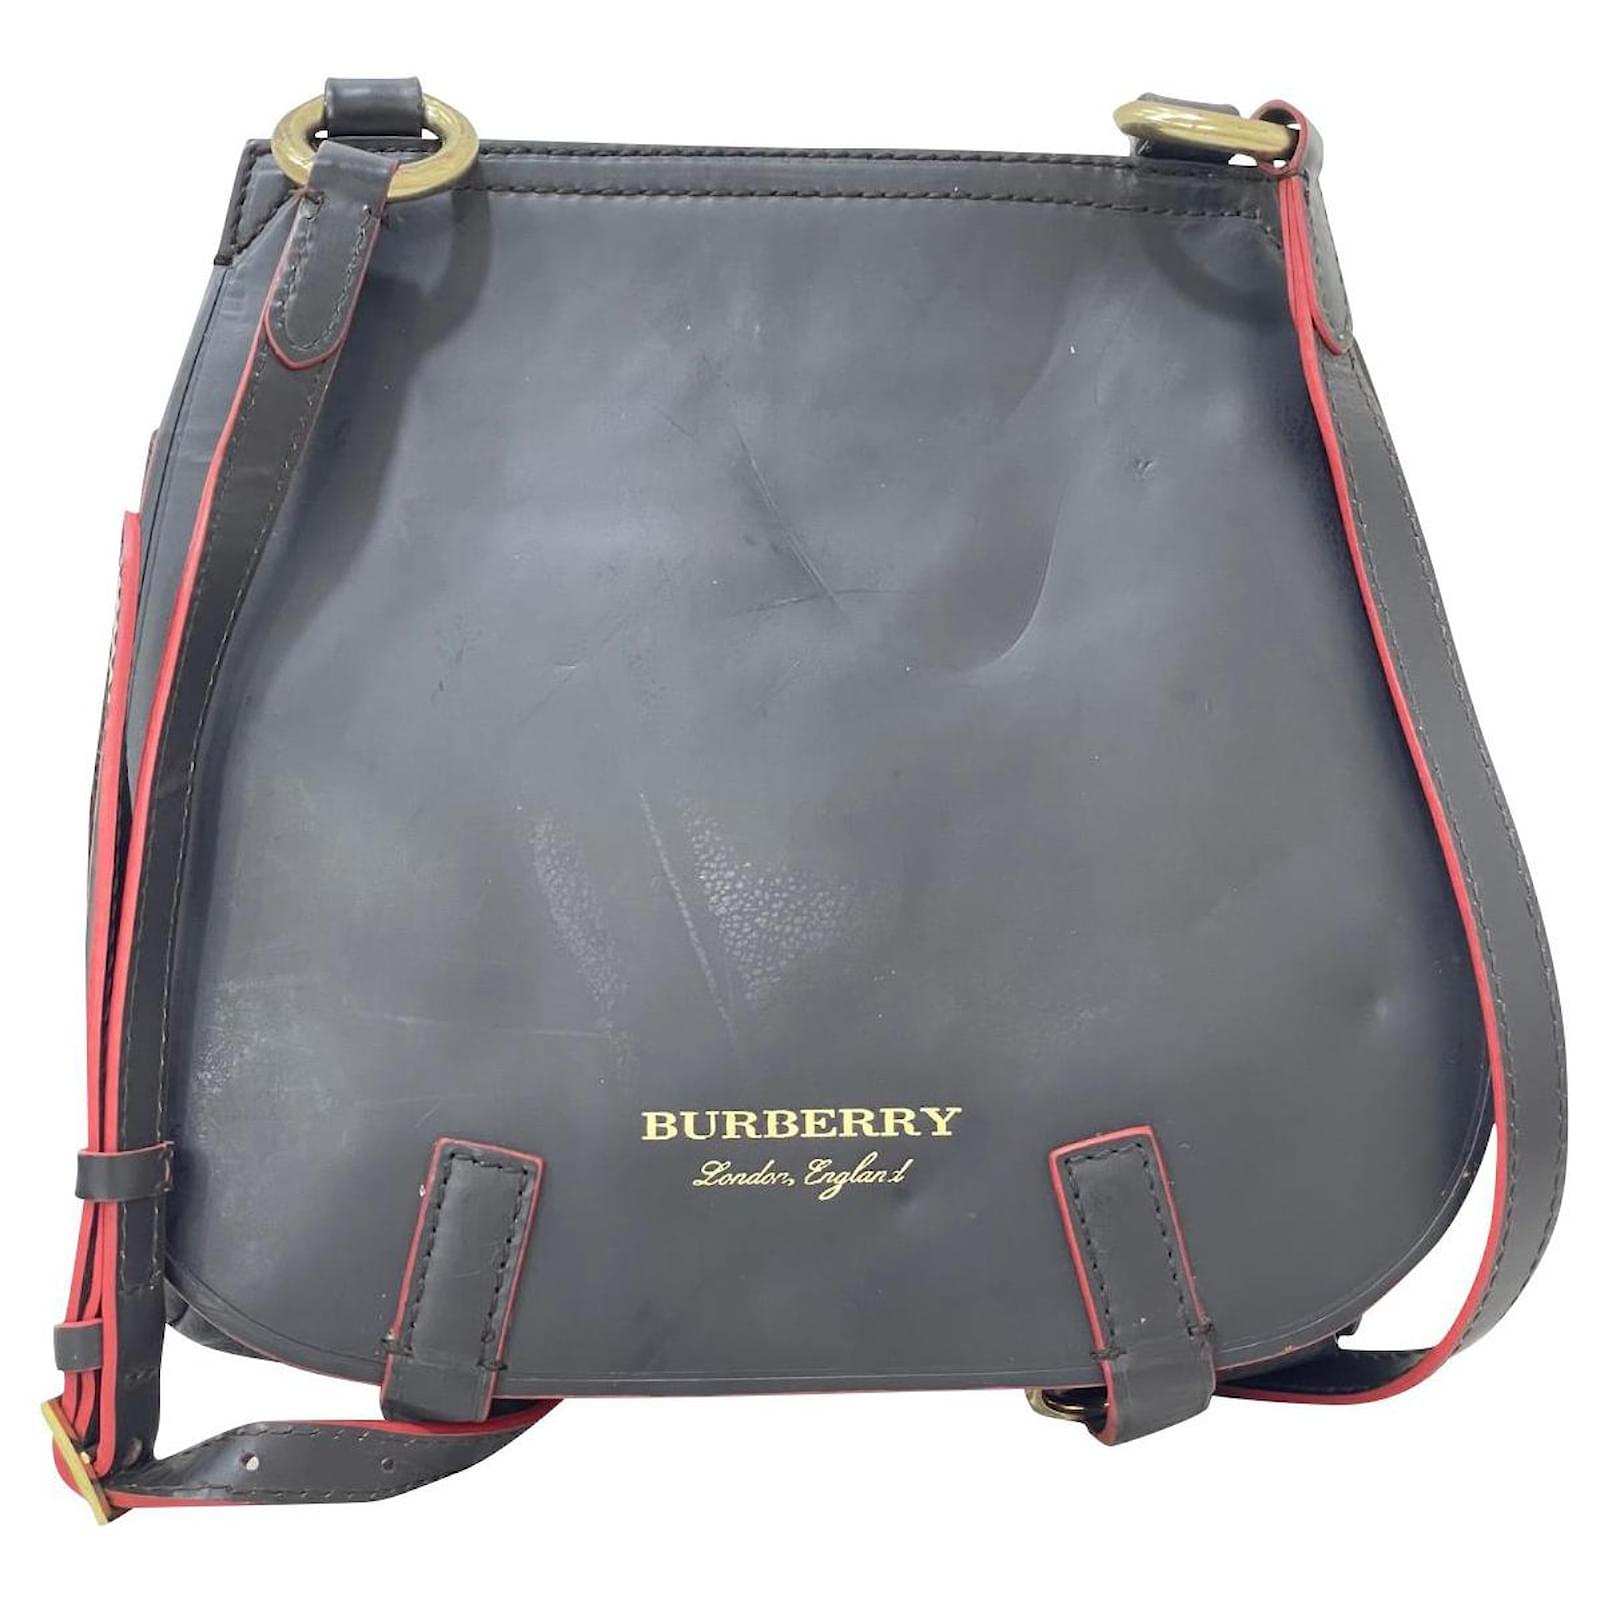 Burberry, Bags, Authentic Burberry Bridle Mini Bag